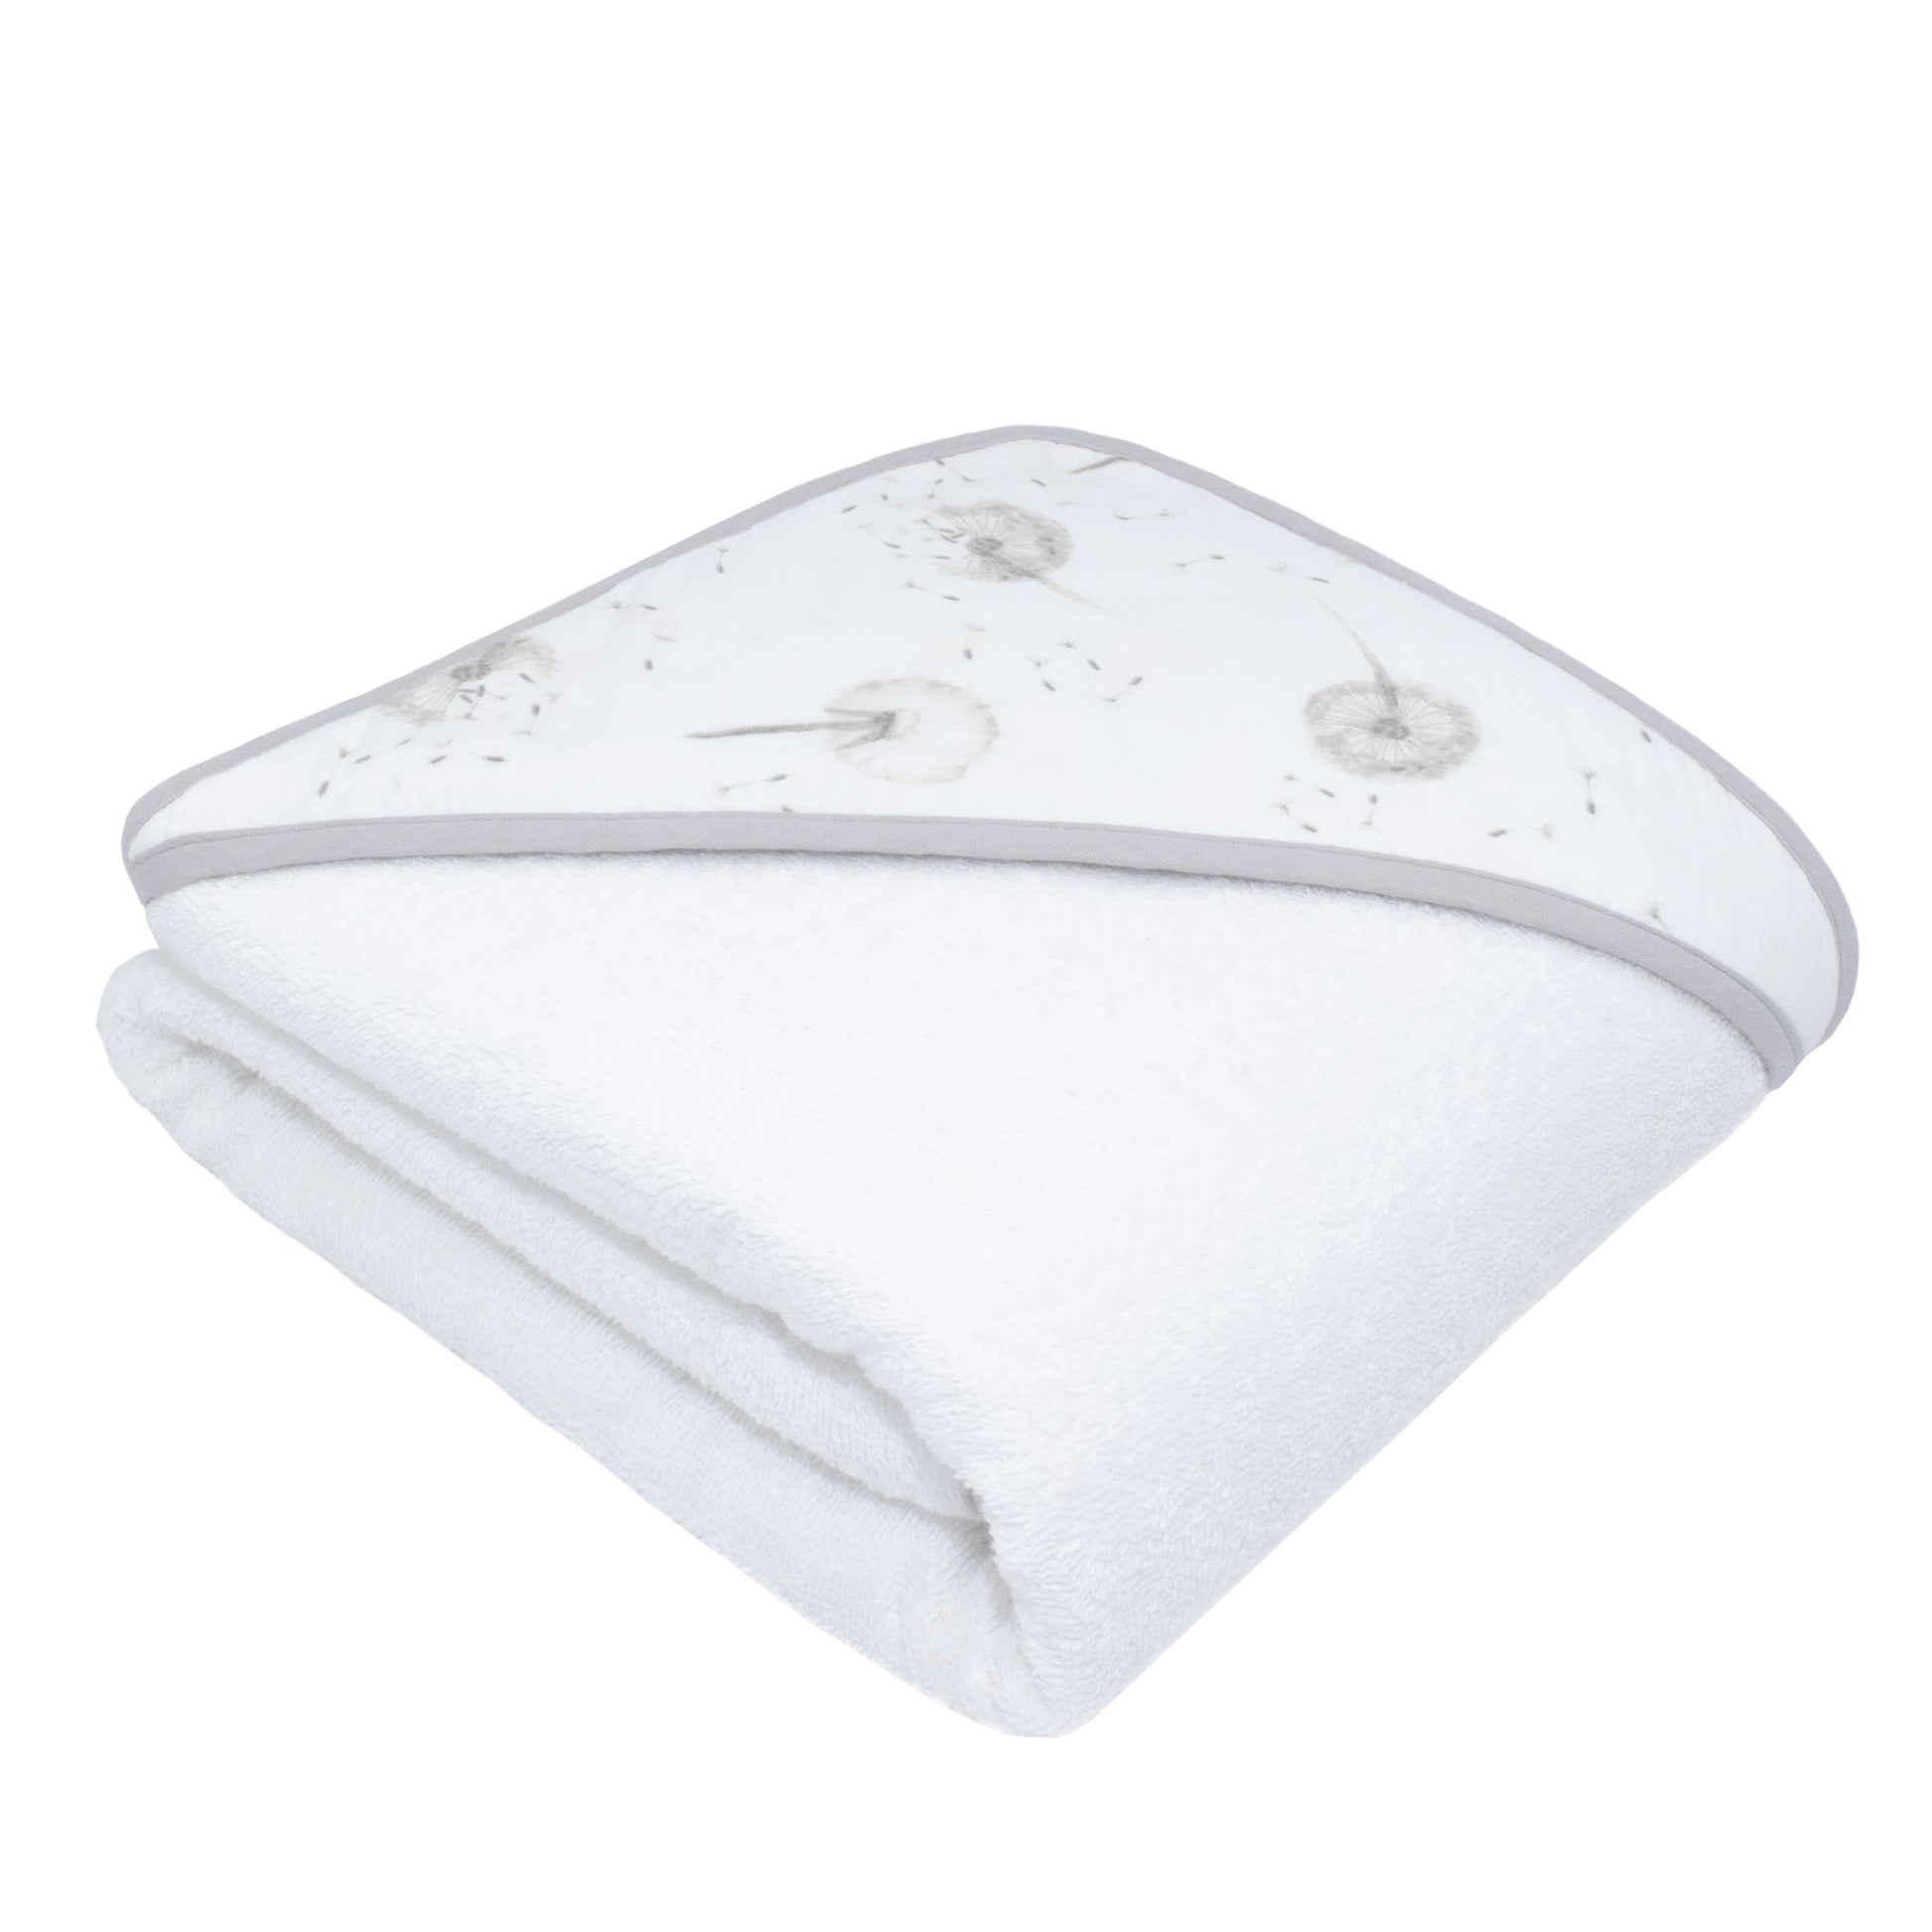 Organic Muslin grey hooded towel with dandelion design.